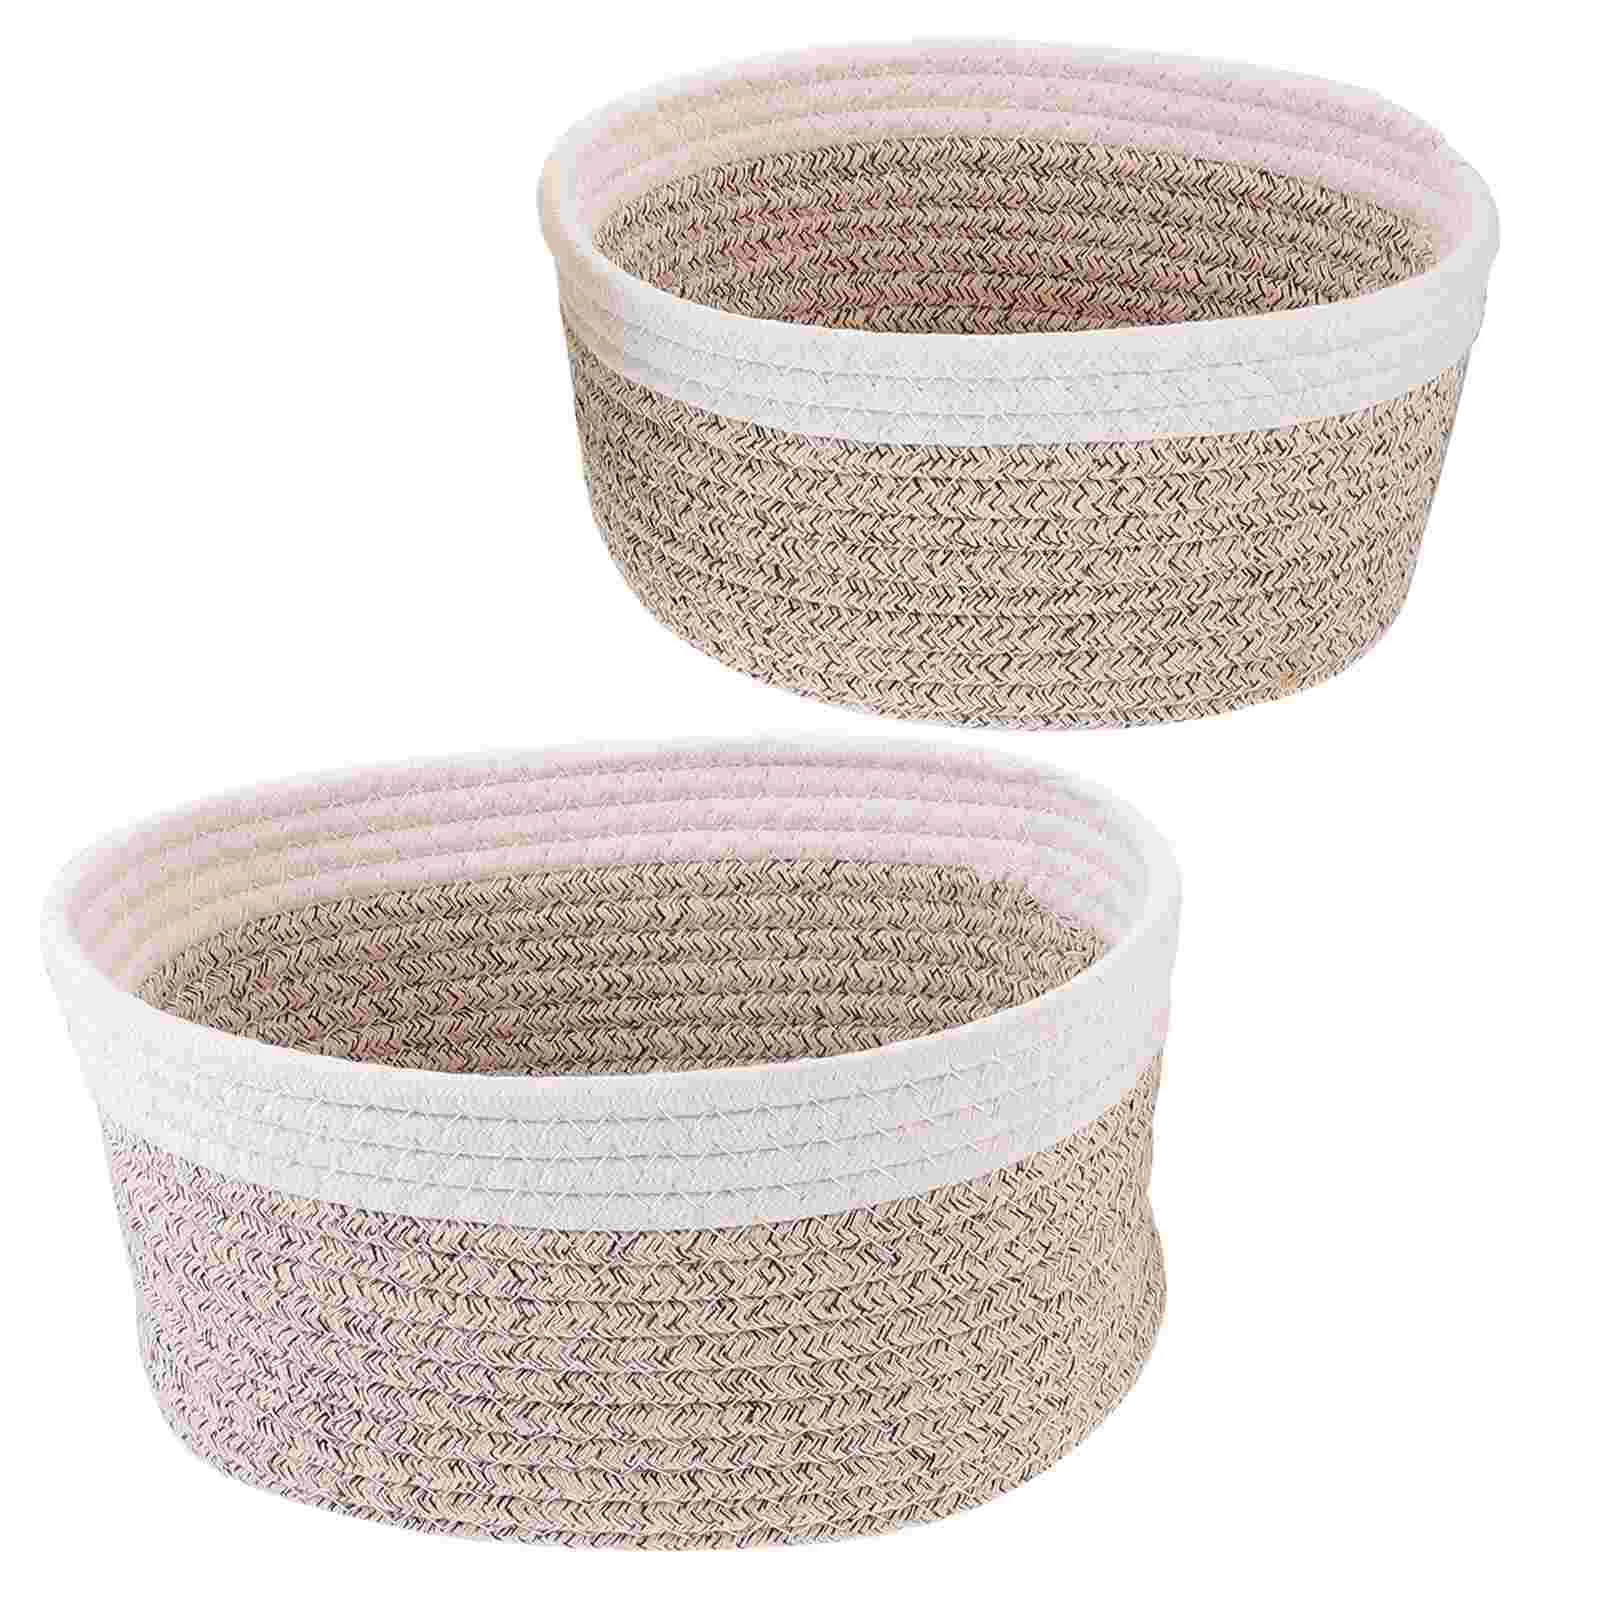 

2 Pcs Woven Storage Basket Bedroom Sundries Laundry Cotton Rope Weaving Baskets Snack Holder Small Desktop